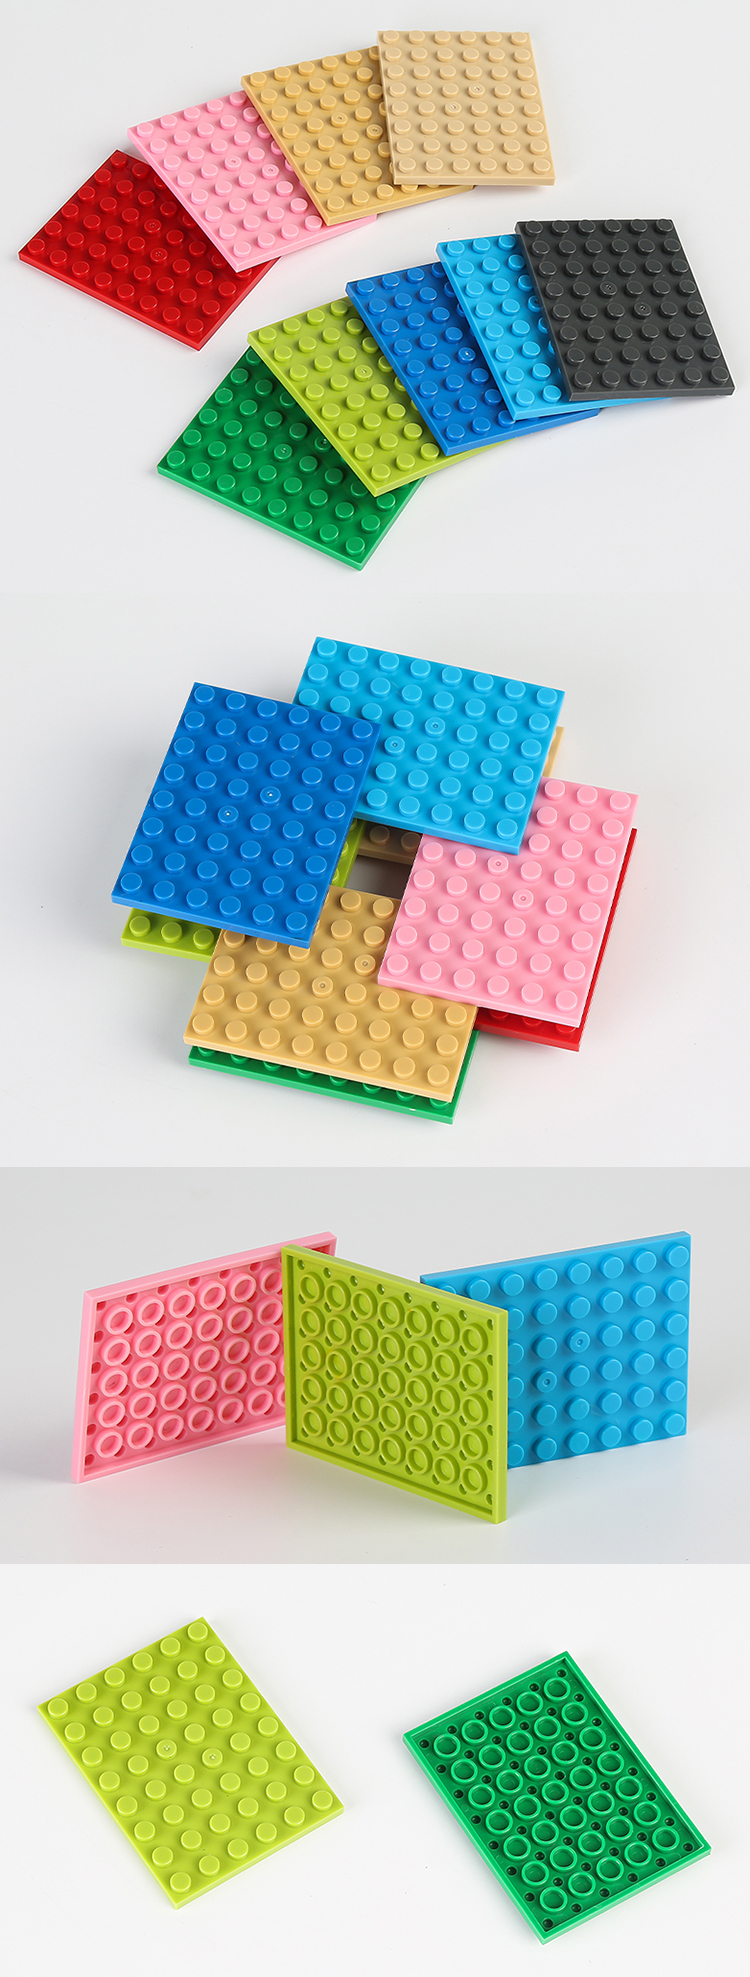 WOMA TOYS Creative Educational Construction DIY Bulk Building Blocks Brick Plate 6 x 8 Accessories moc 6*8 Base Plate (3036)